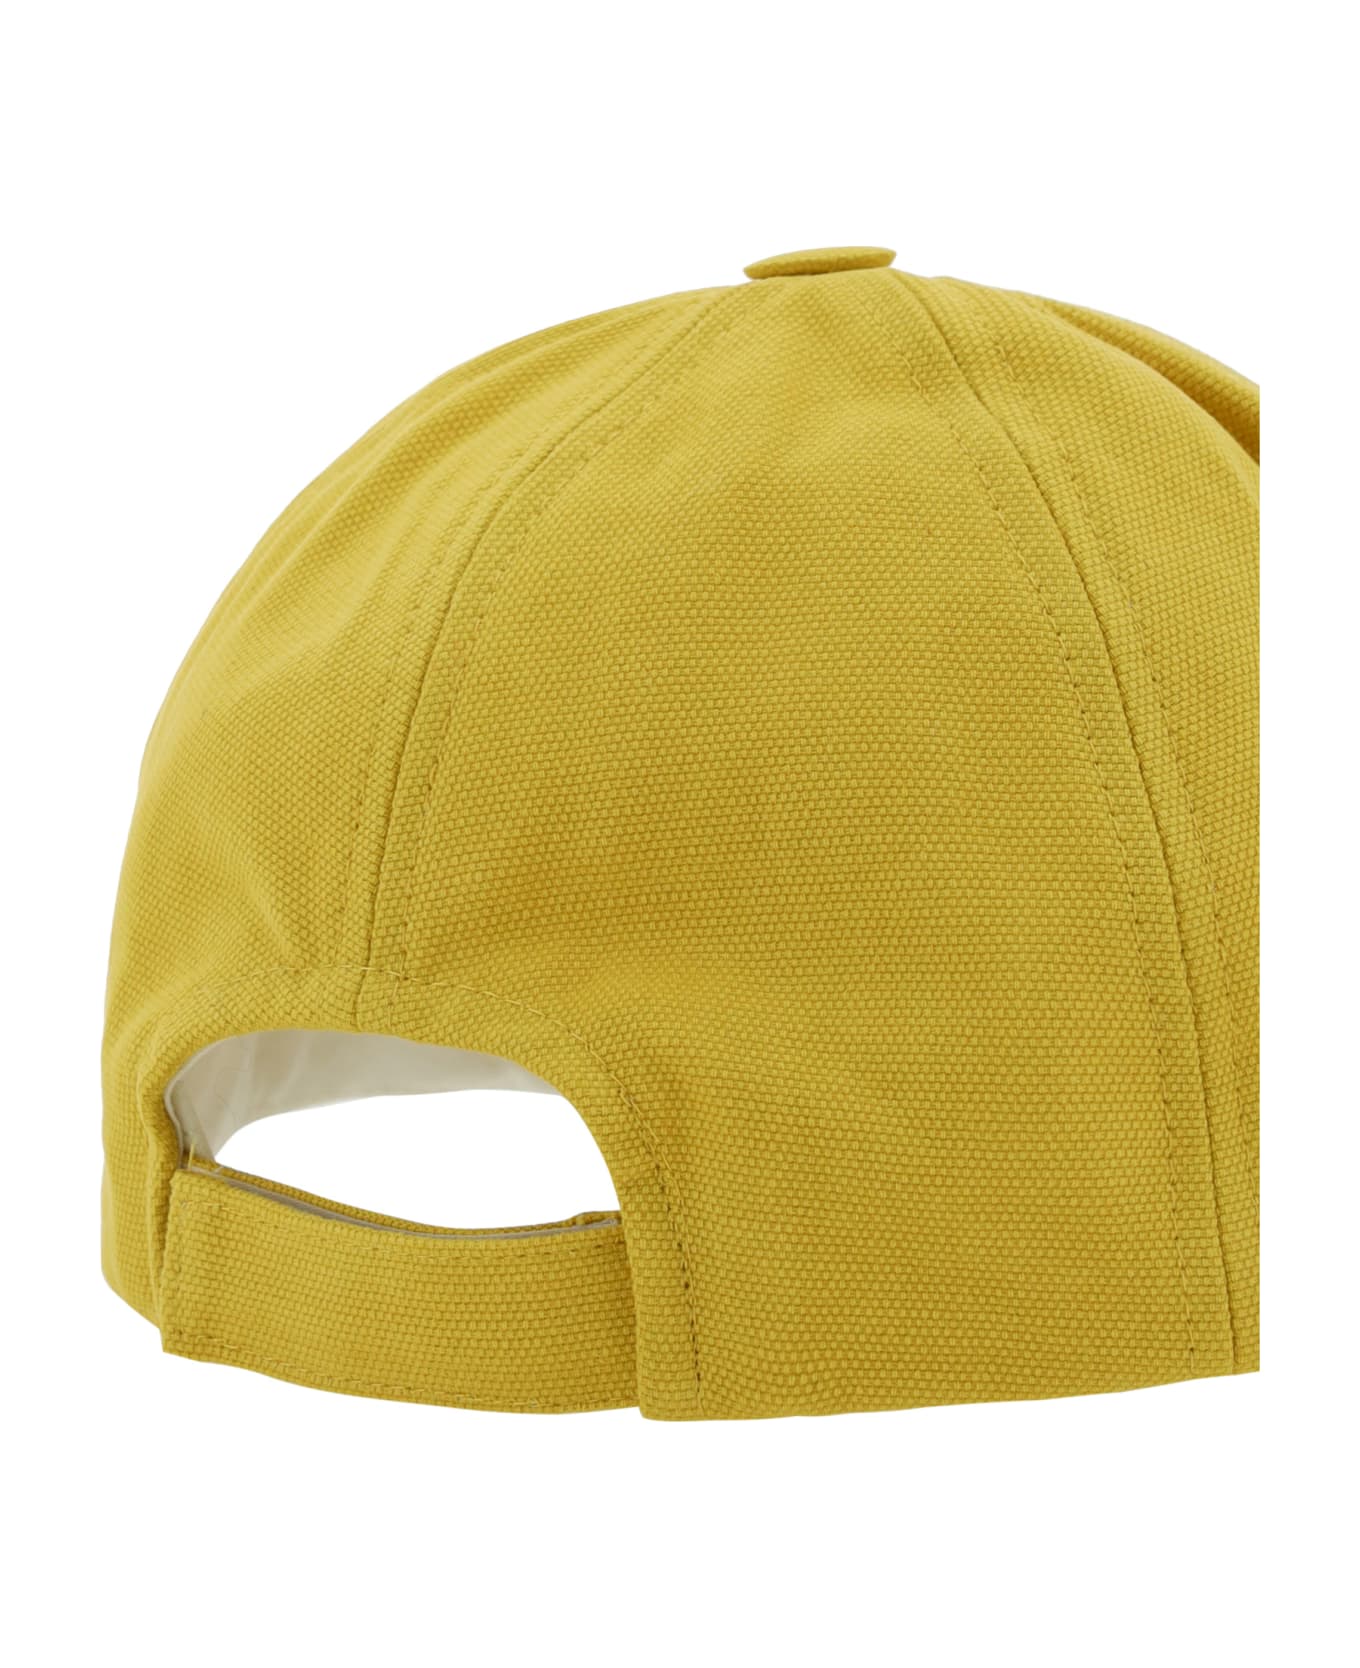 Isabel Marant Tyron Baseball Hat - Yellow/ Ecru